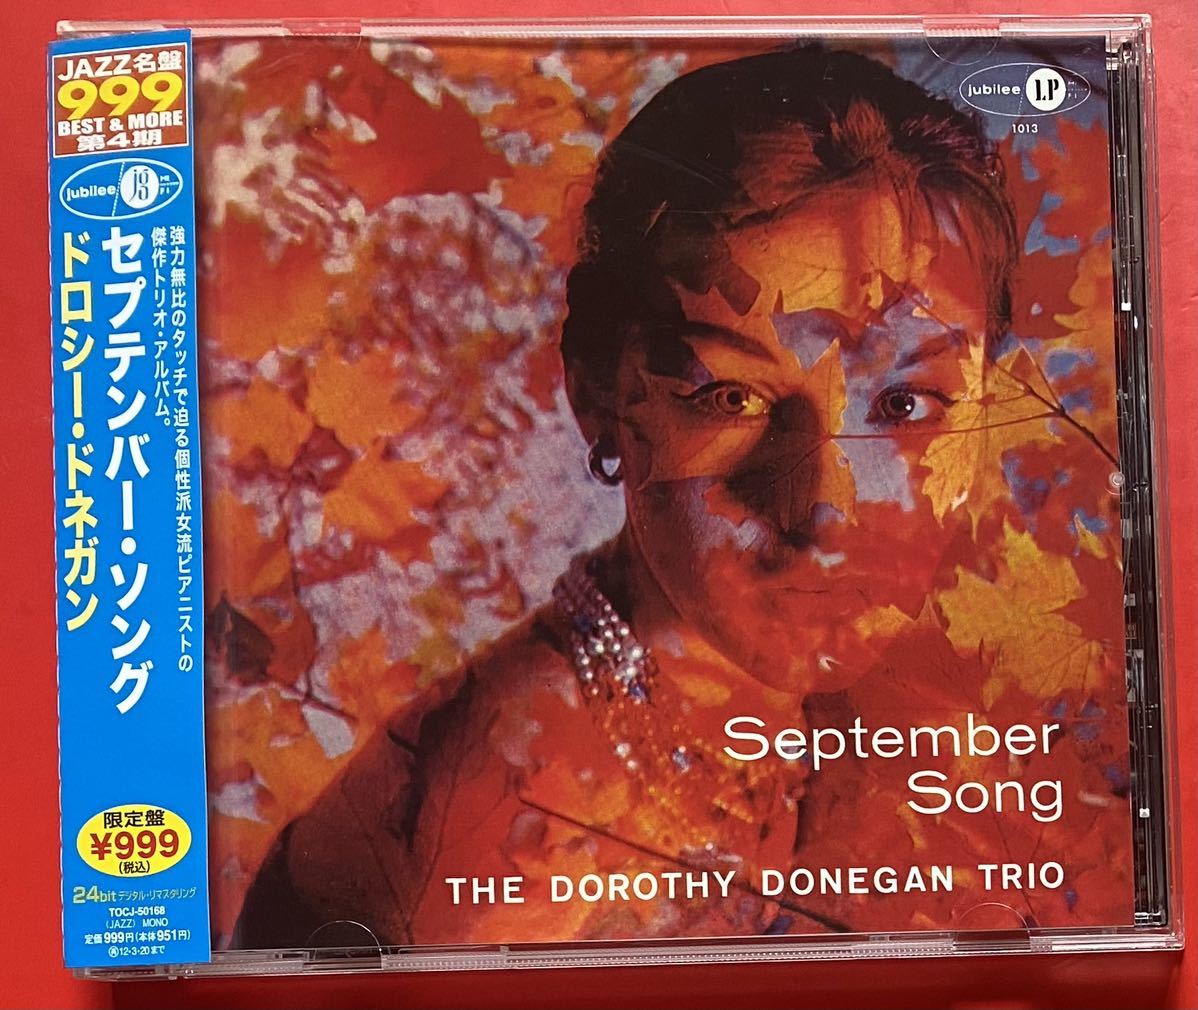 【CD】ドロシー・ドネガン「SEPTEMBER SONG」DOROTHY DONEGAN 国内盤 [09250341]_画像1